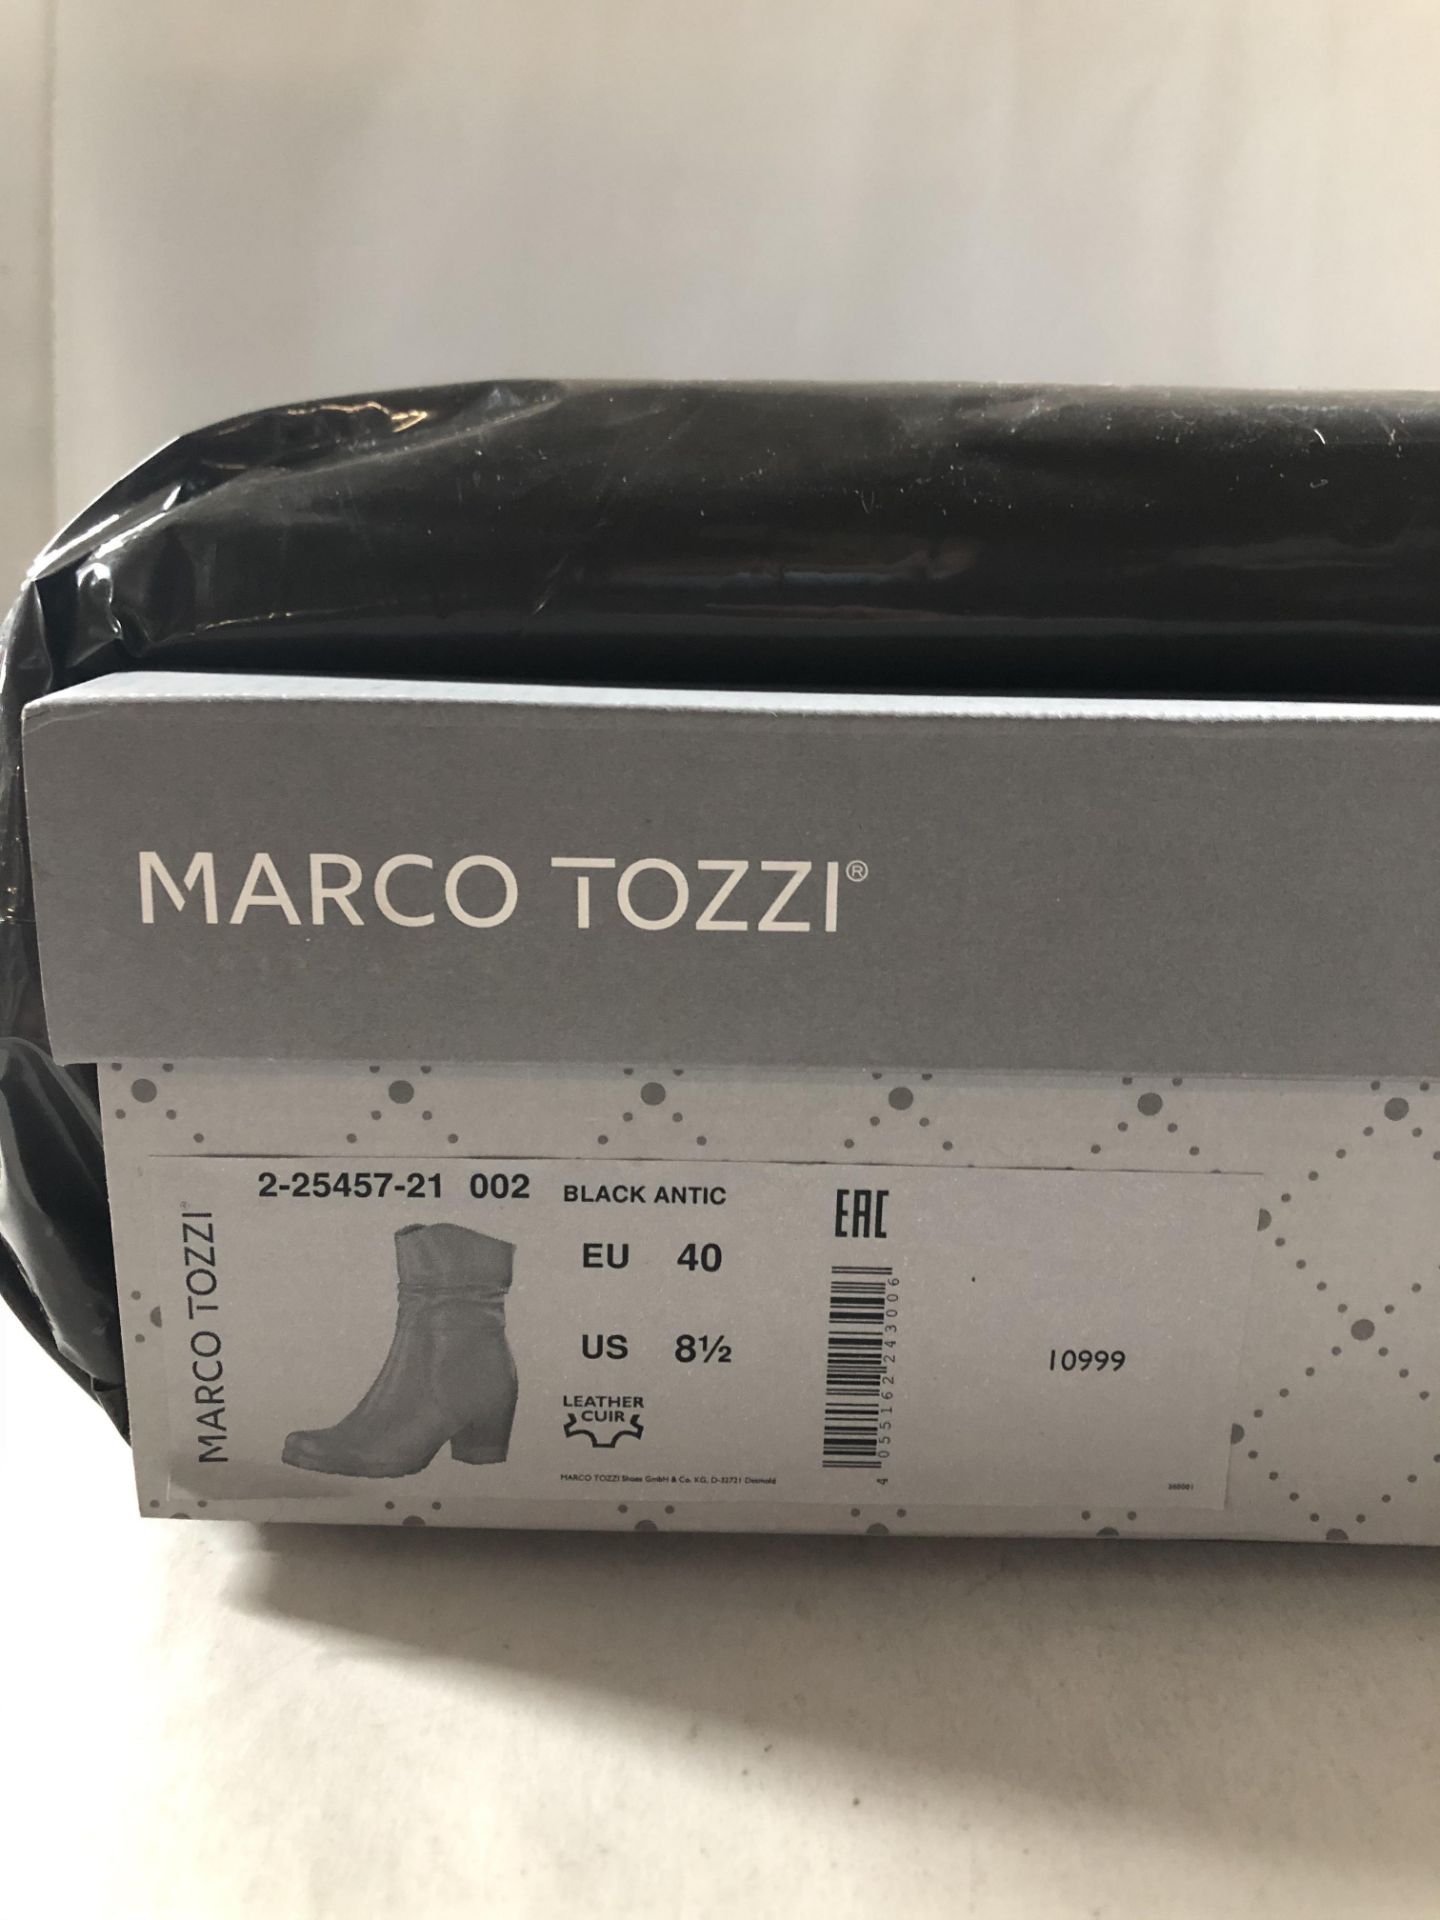 MARCO TOZZI 25457 Boots Shoetique85199 |4055162243006 - Image 2 of 3